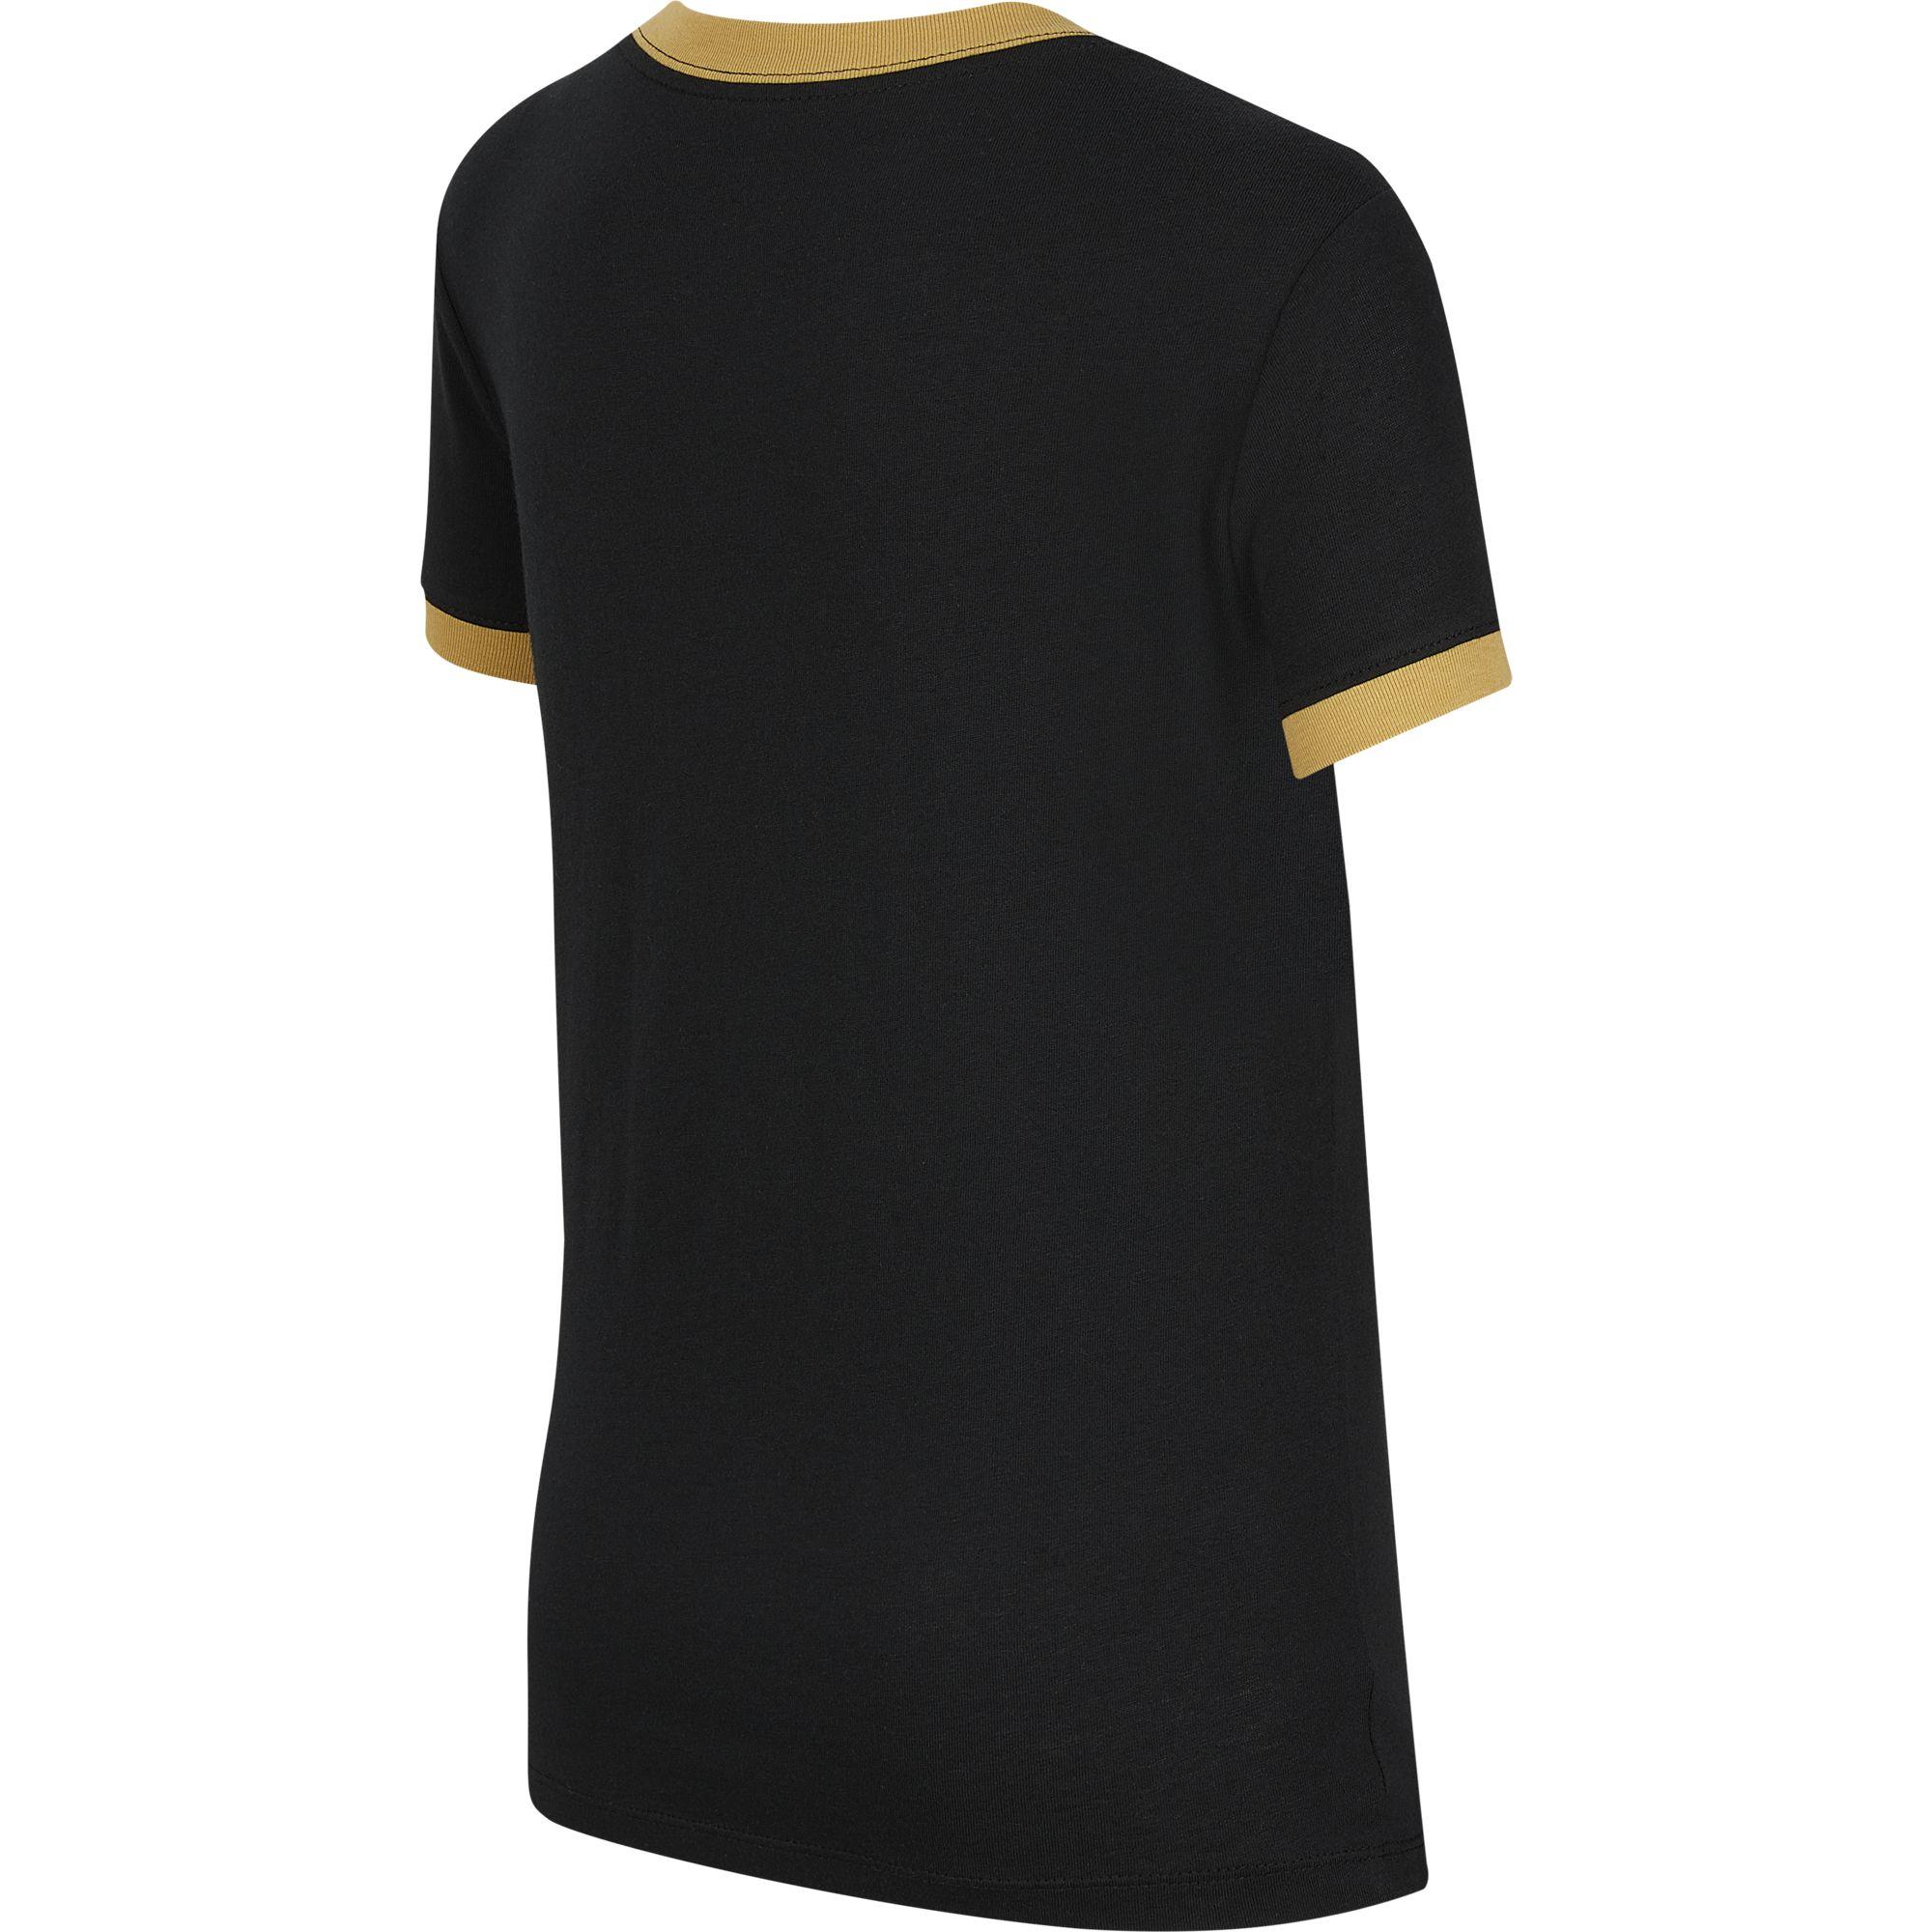 Nike Air Girls T-Shirt - Black/Club Gold - Tennisnuts.com